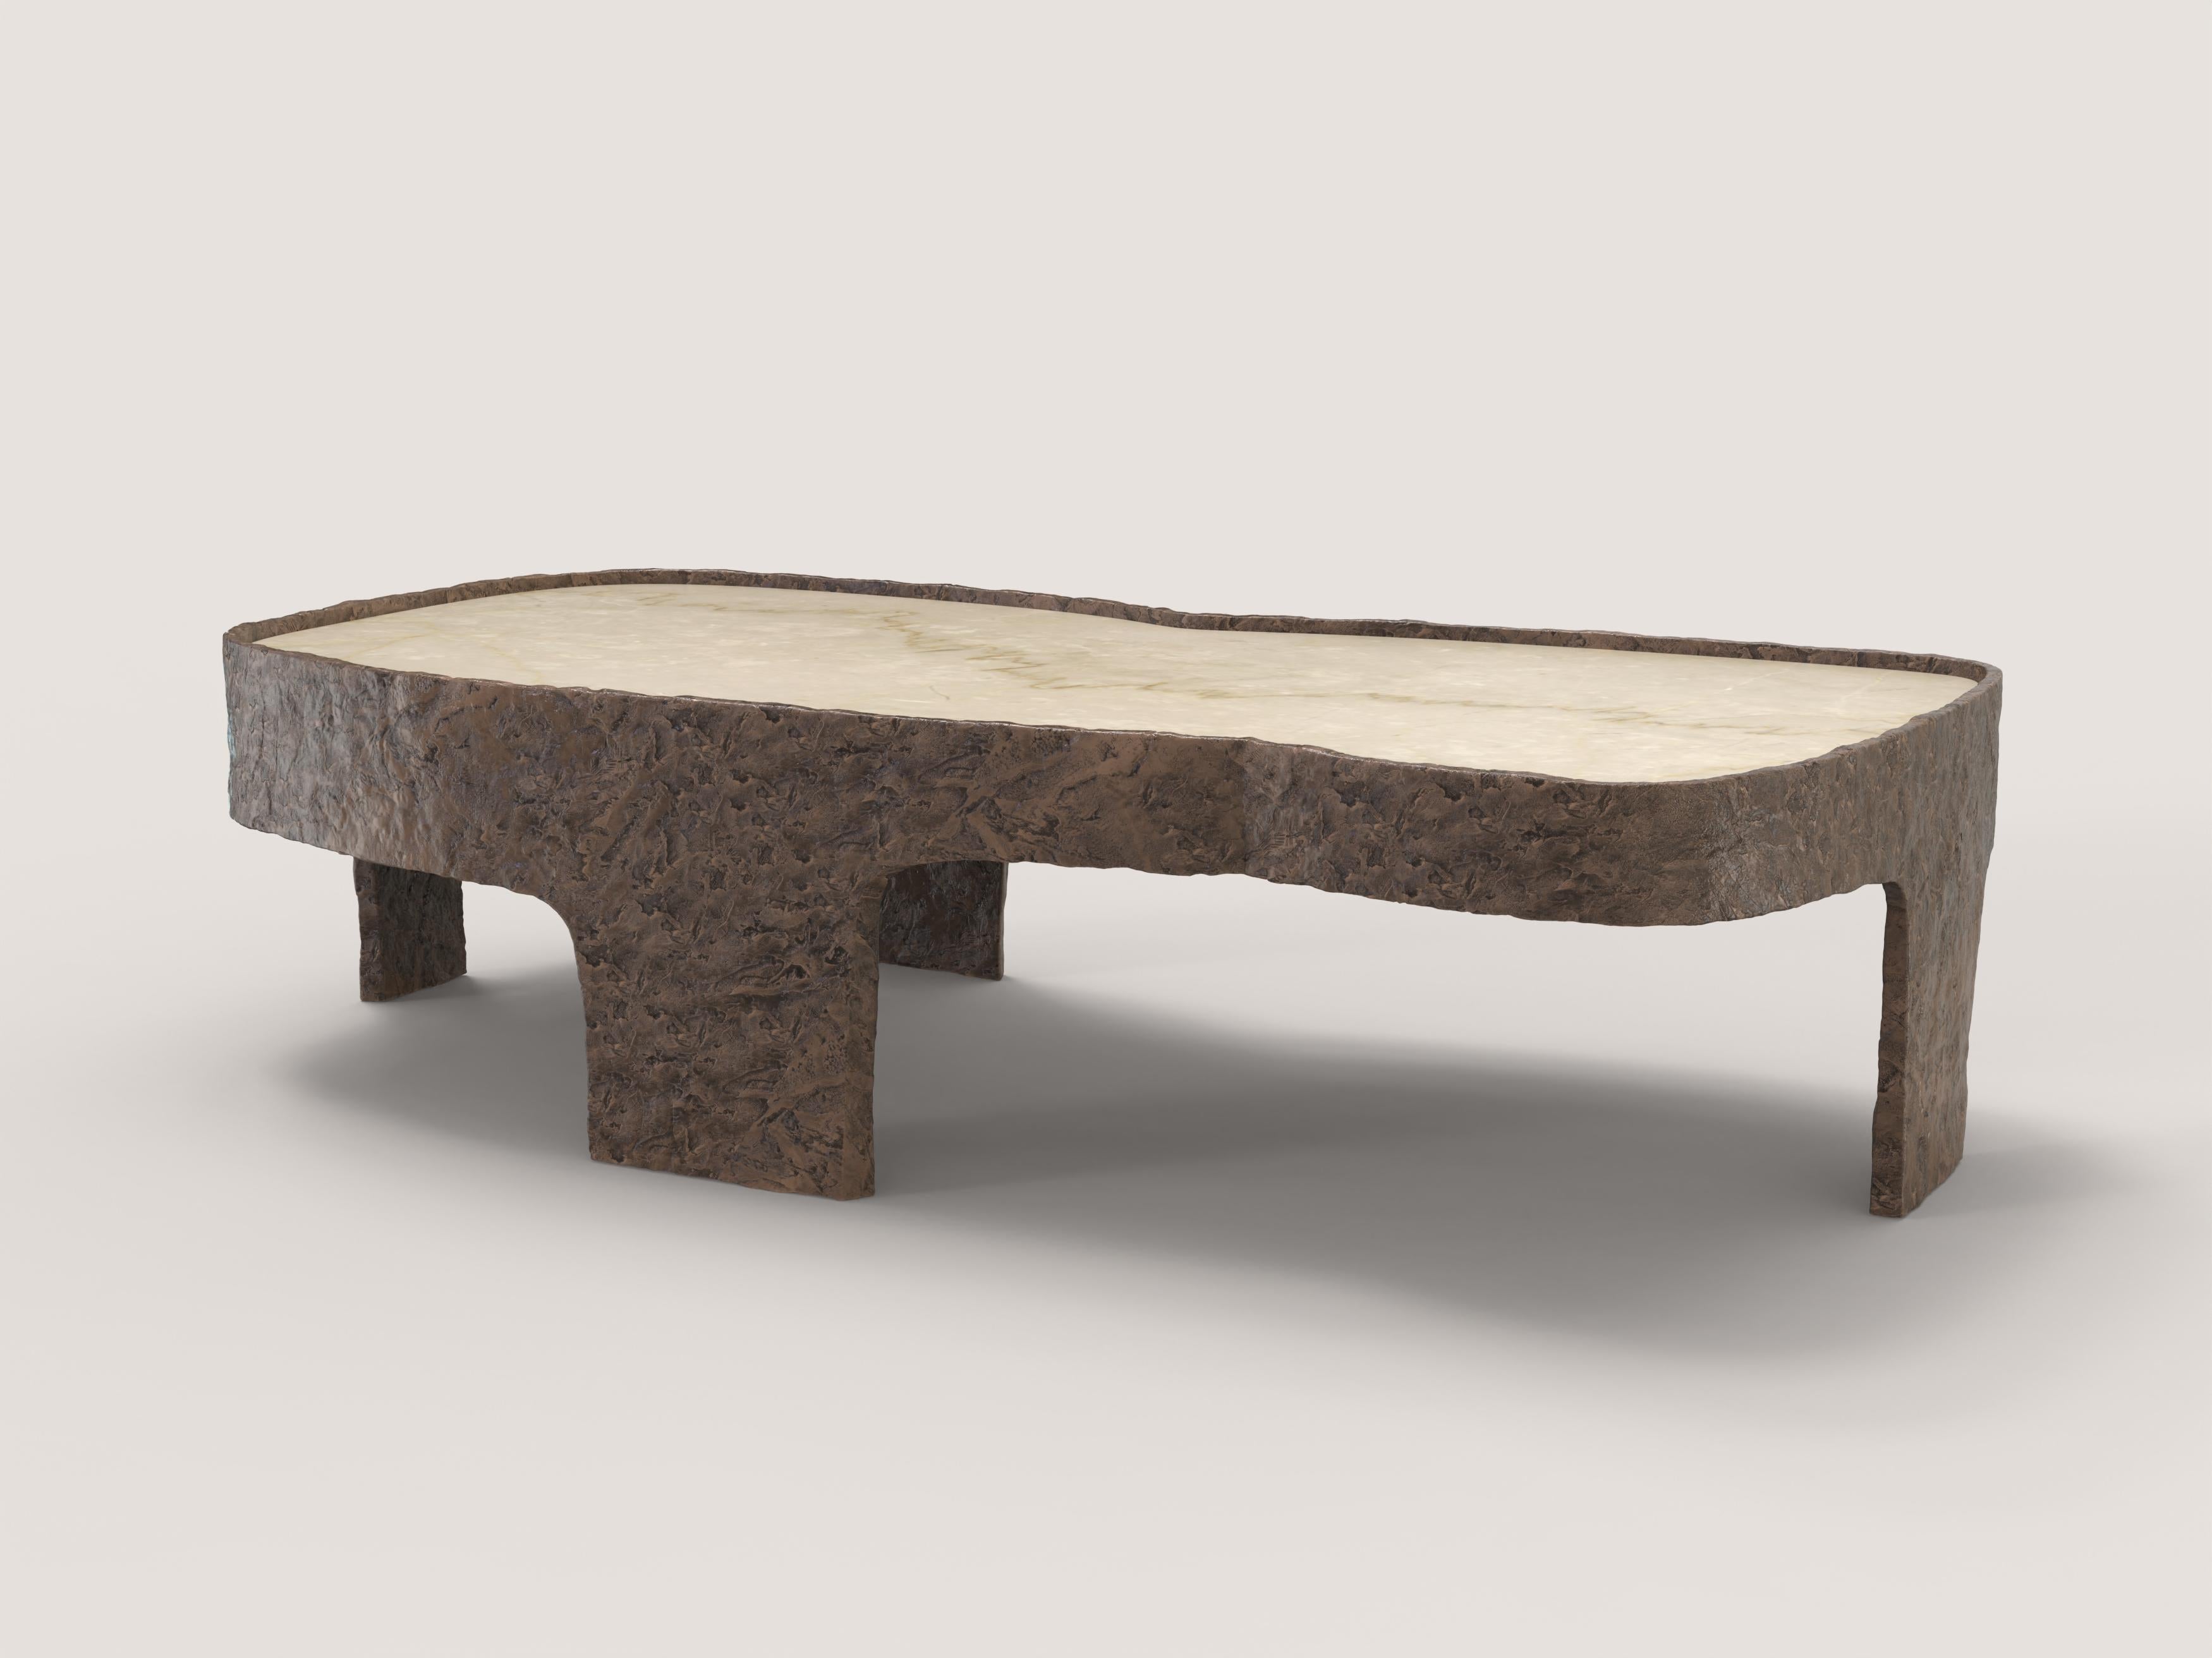 Cast Limited Edition Marble Bronze Table, Sumatra V3 by Edizione Limitata For Sale